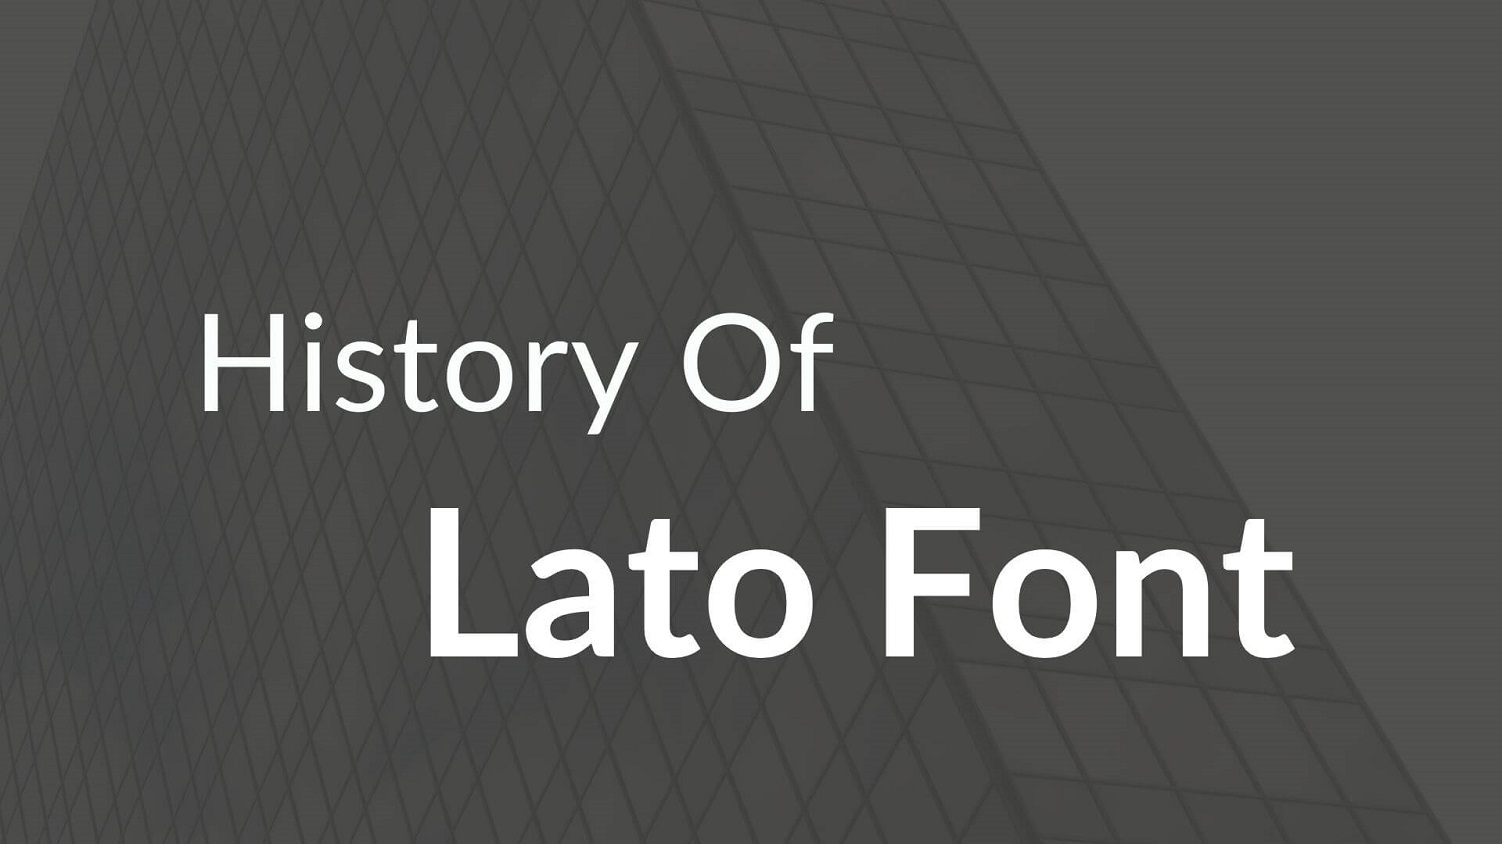 History of Lato Font